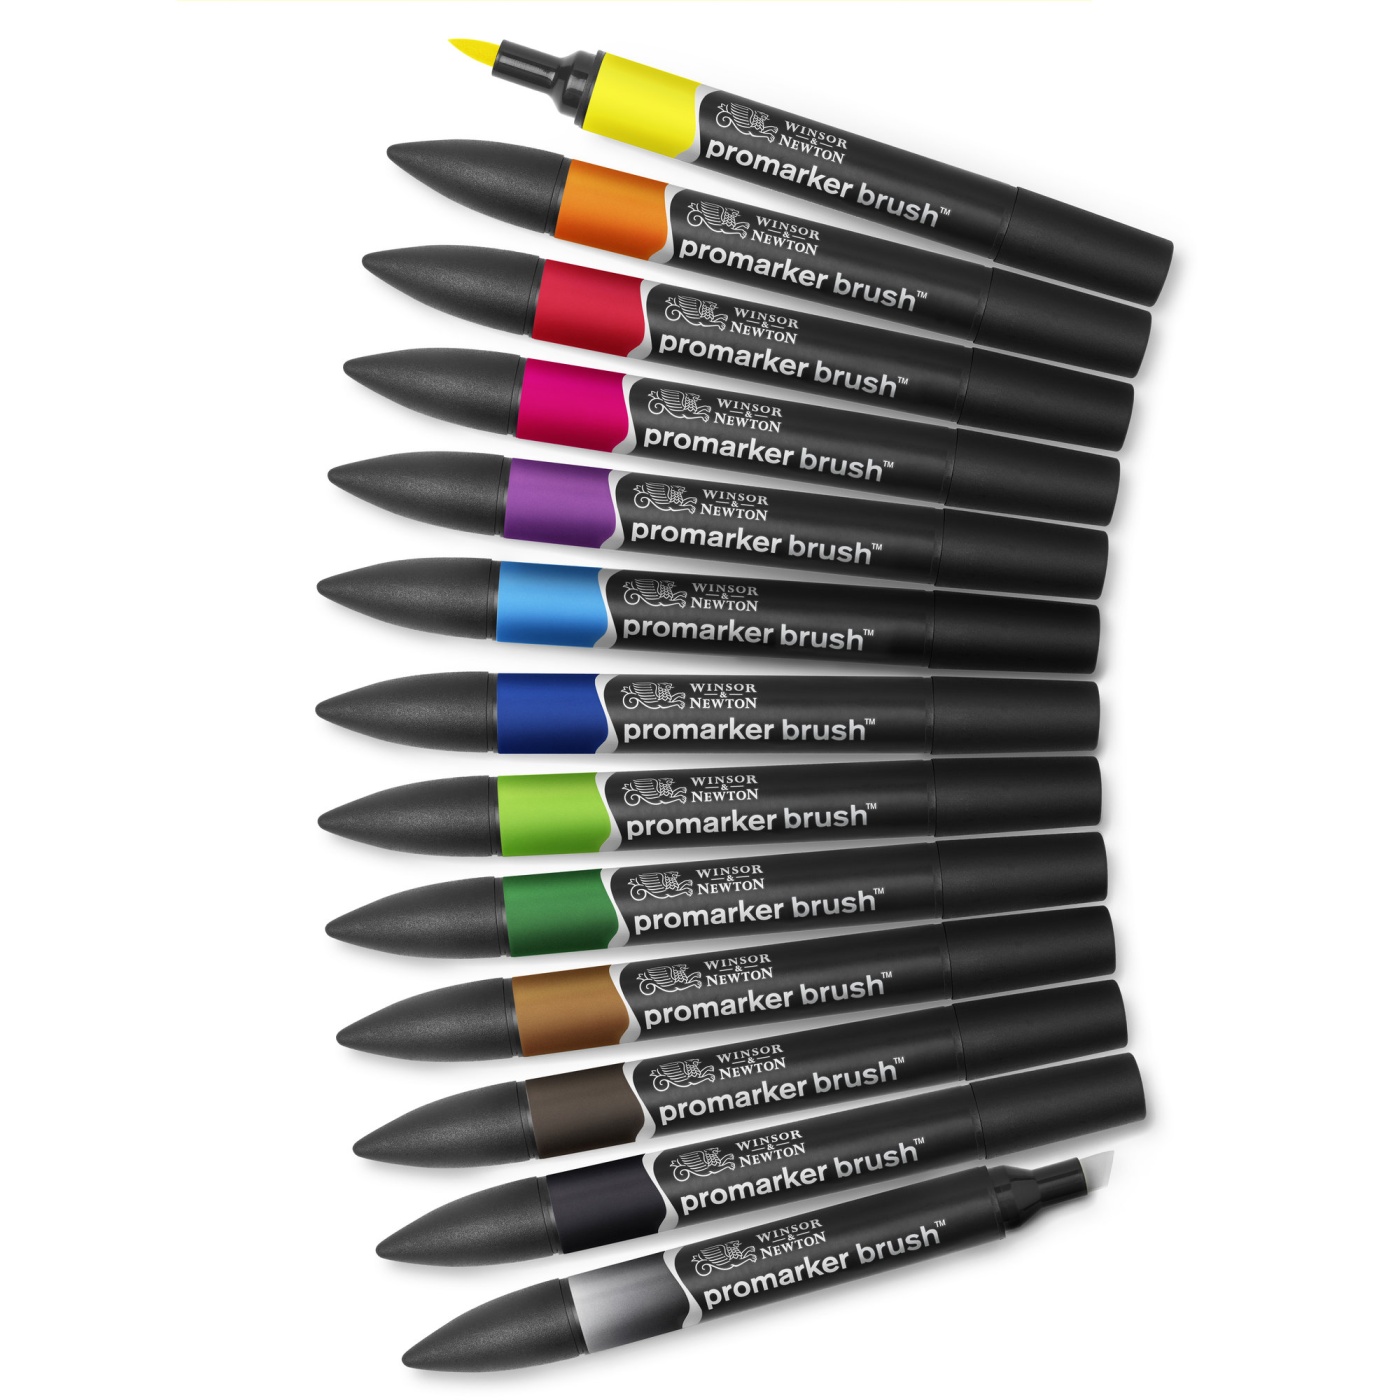 BrushMarker 12-set + blender (Set 1) in the group Pens / Artist Pens / Illustration Markers at Pen Store (100557)